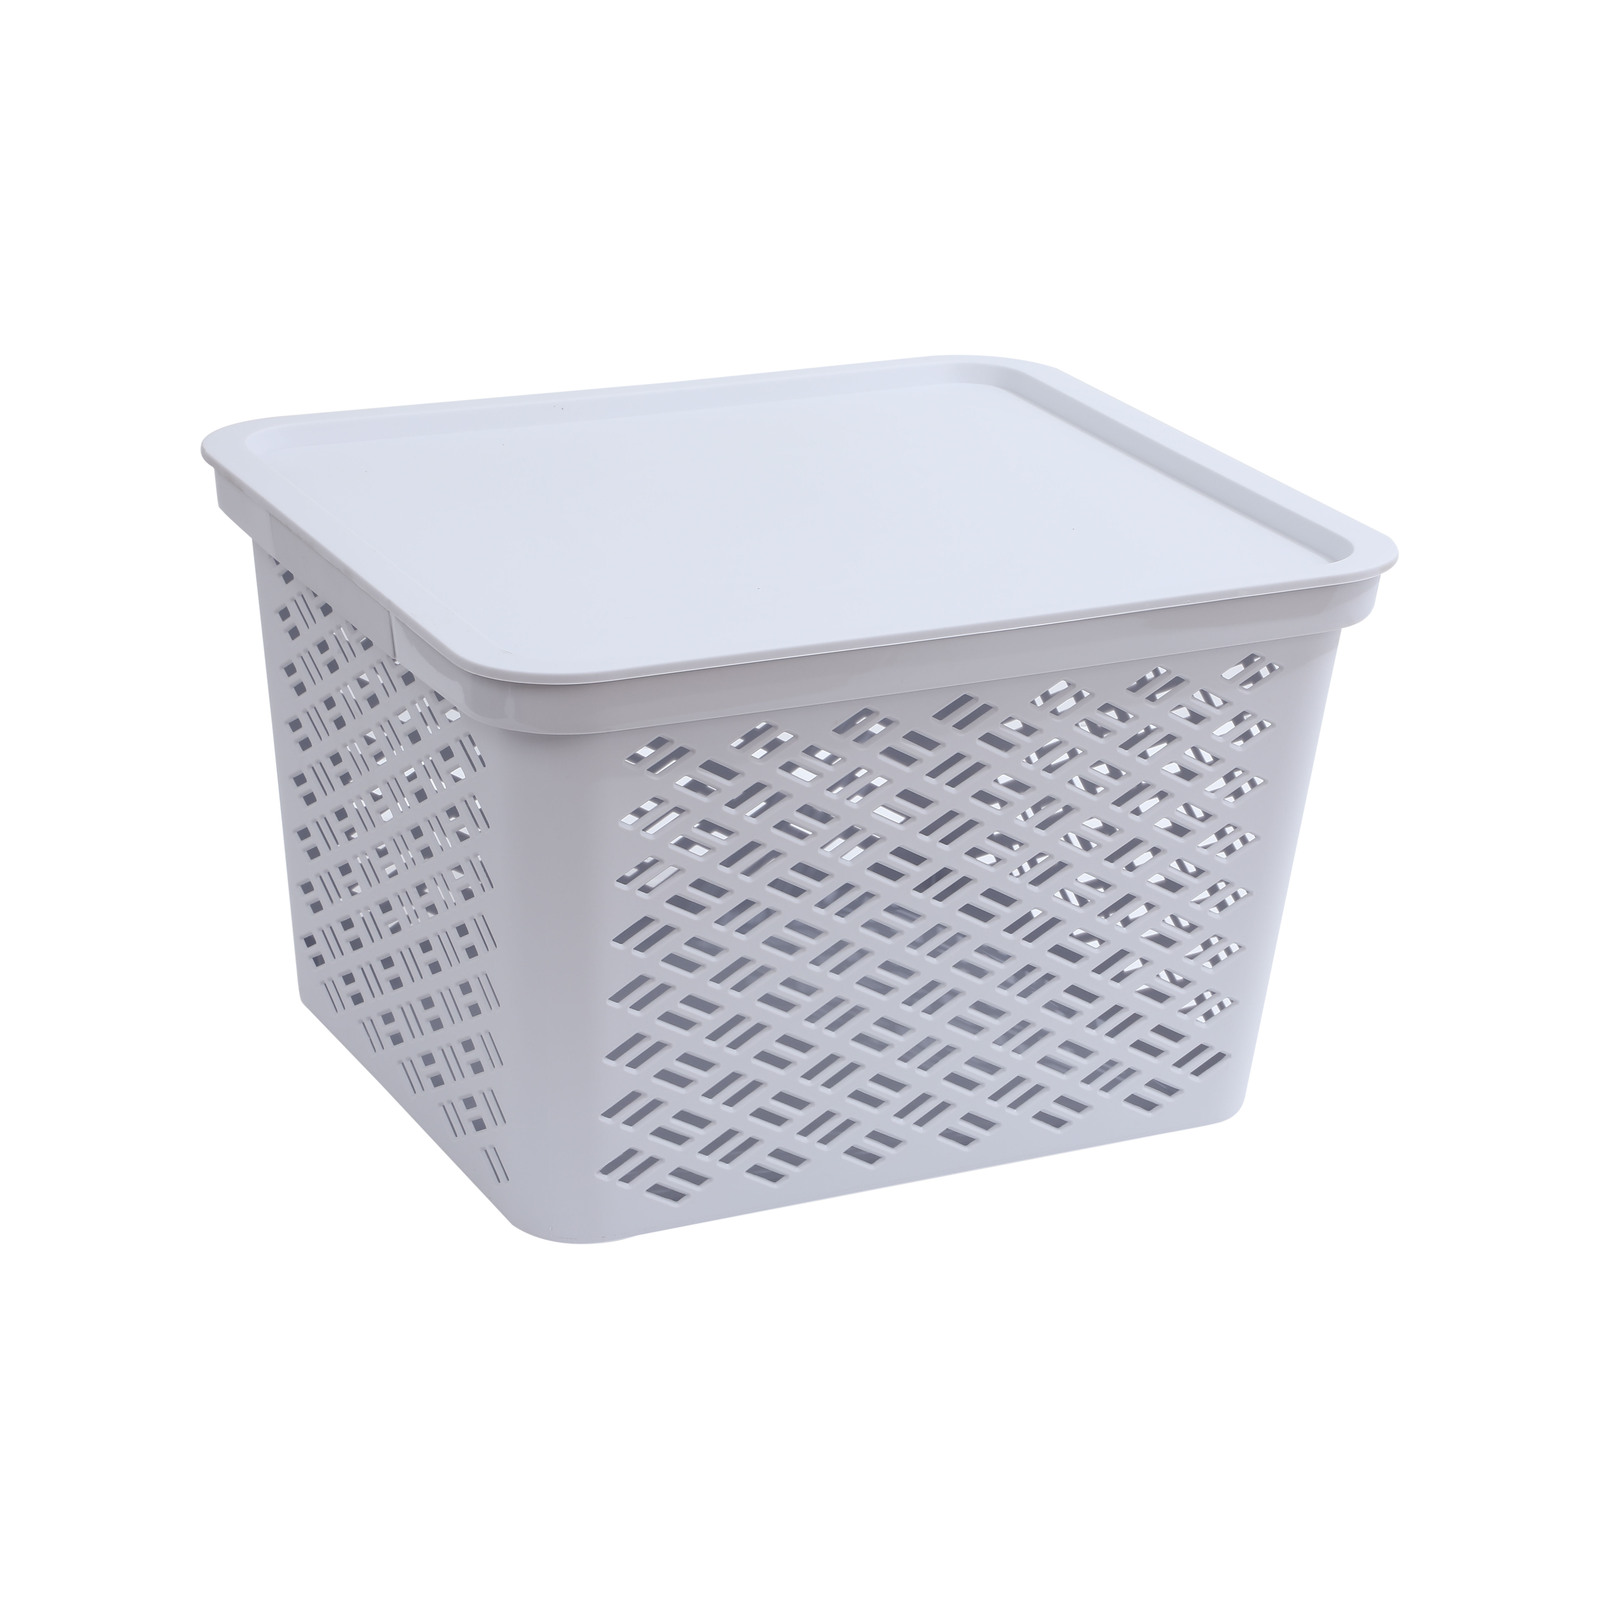 Basket in White, Shopping Basket, Upcycled Plastic Storage Basket